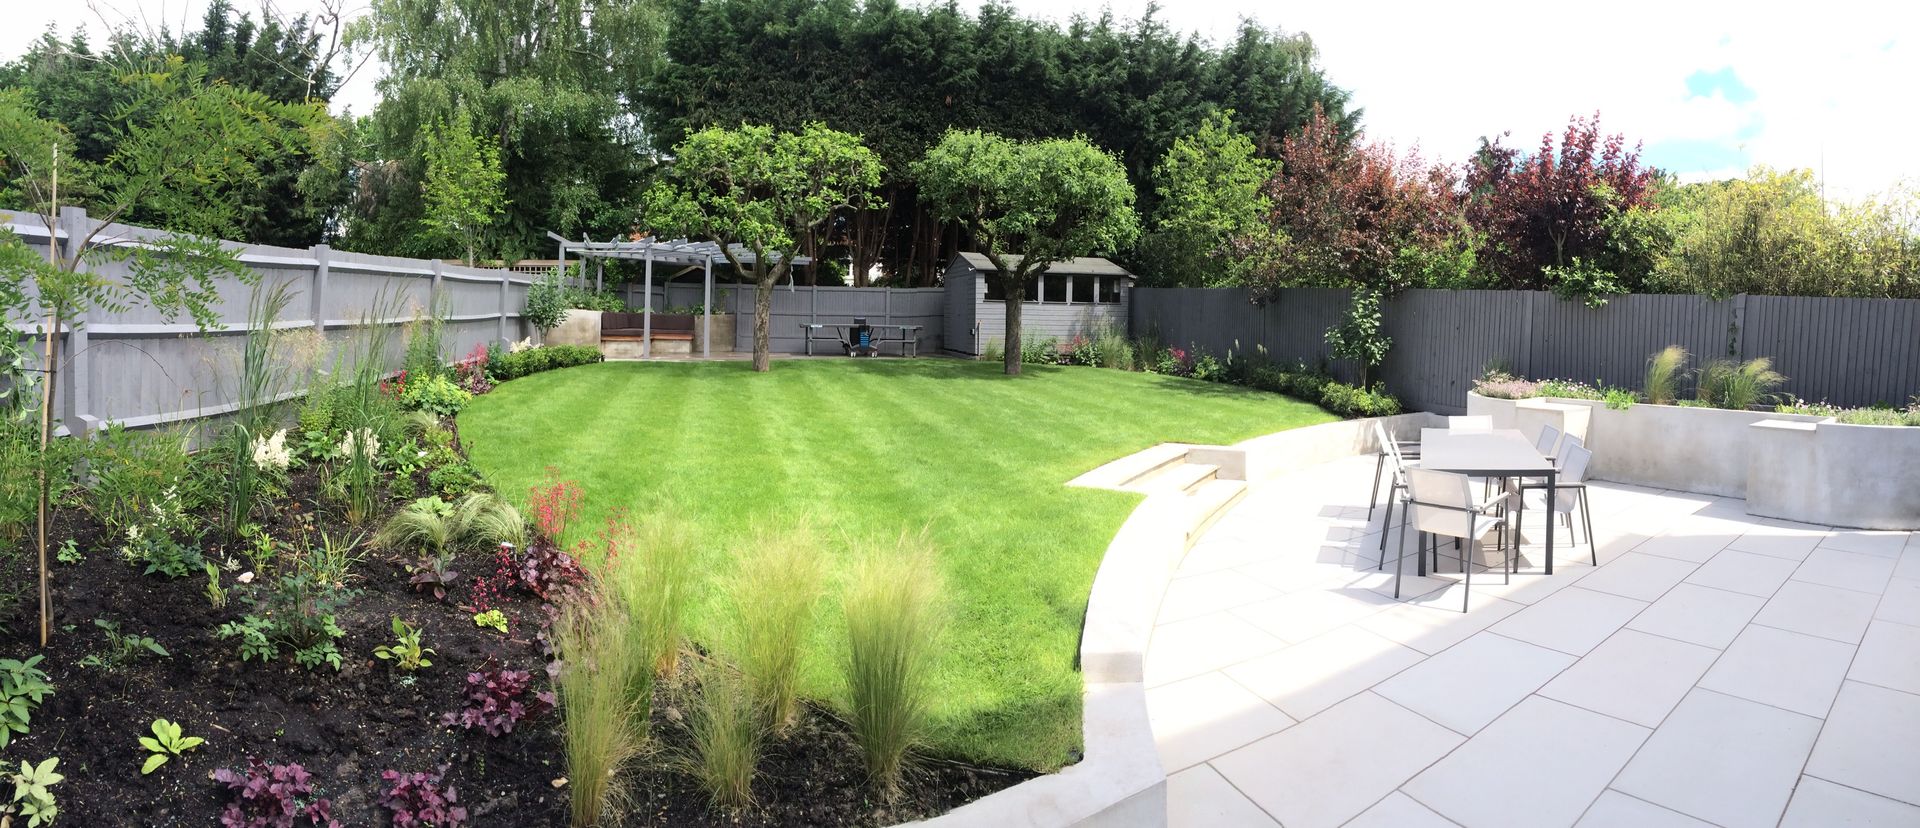 Modern Family Garden Borrowed Space حديقة lawn,modern,contempoary,pergola,raised border,wall,concrete,paving,render